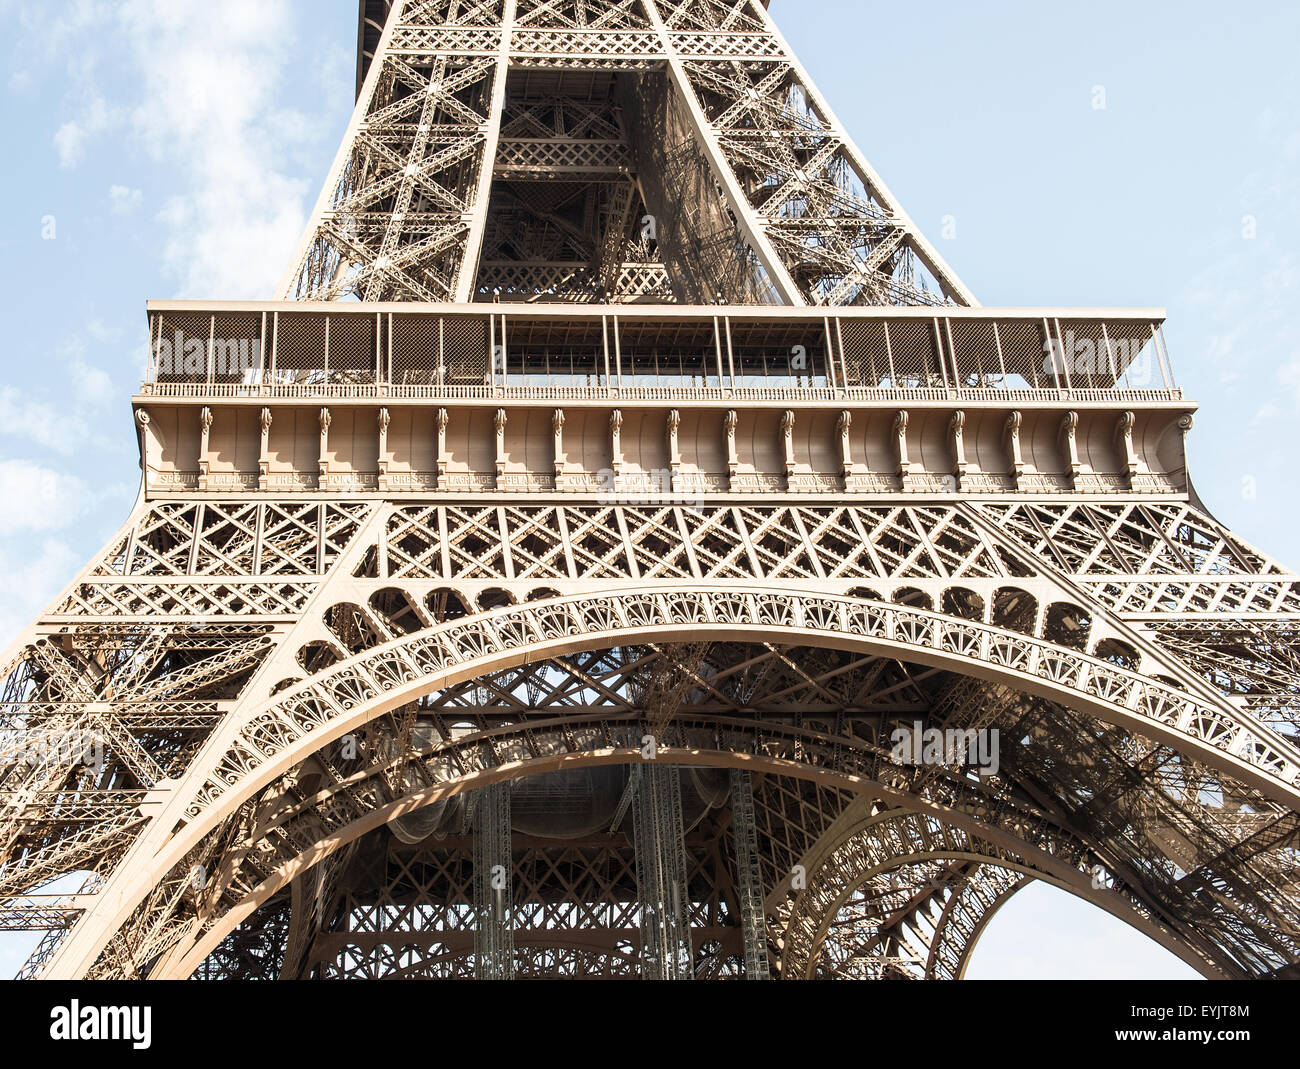 The Eiffel Tower (La Tour Eiffel) in Paris France over cloudy blue sky. Detail of iron construction Stock Photo